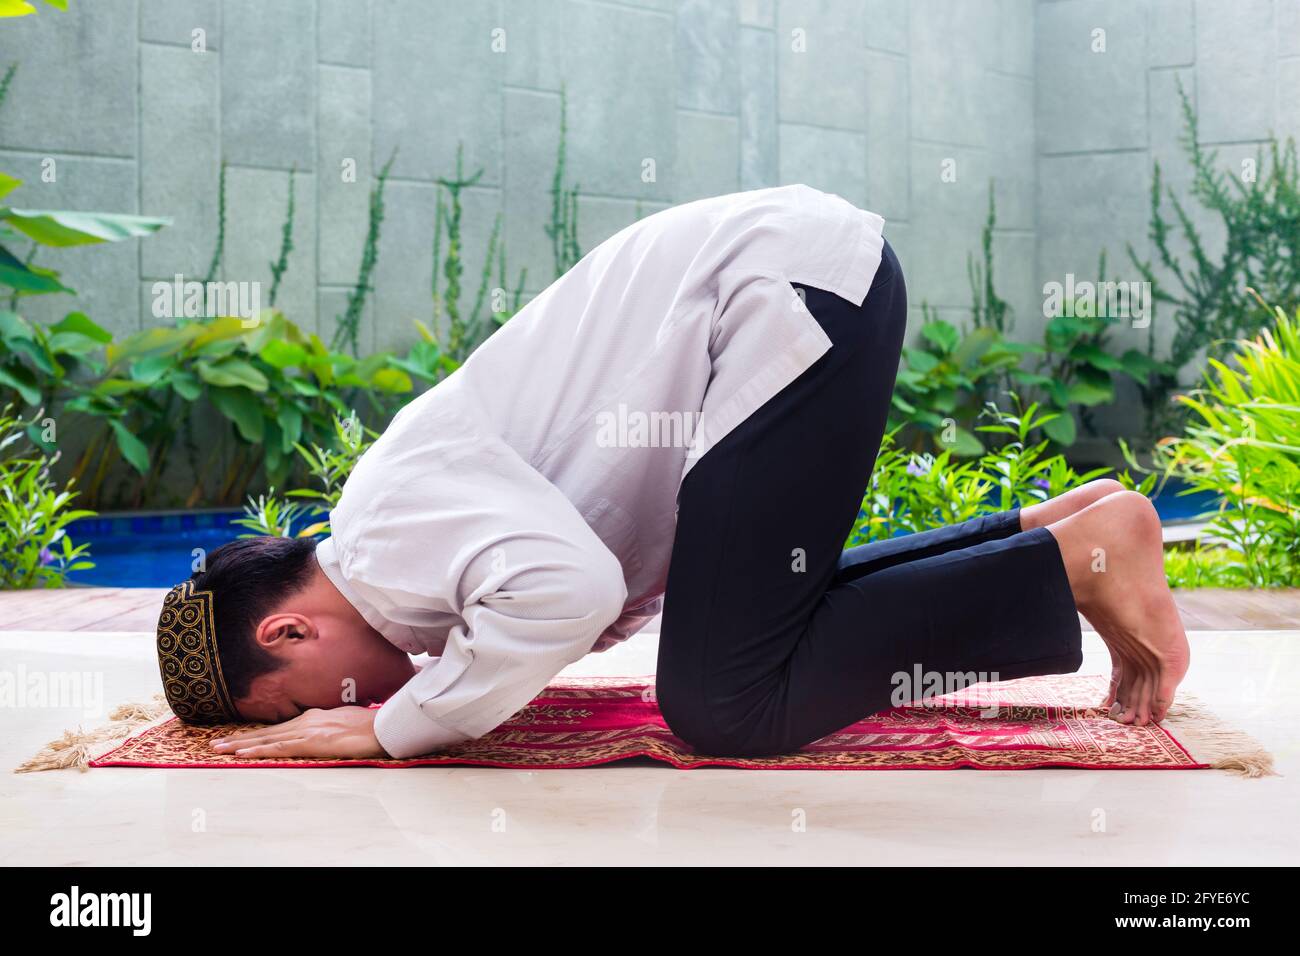 Asian Muslim man praying on carpet with beads chain wearing traditional ...